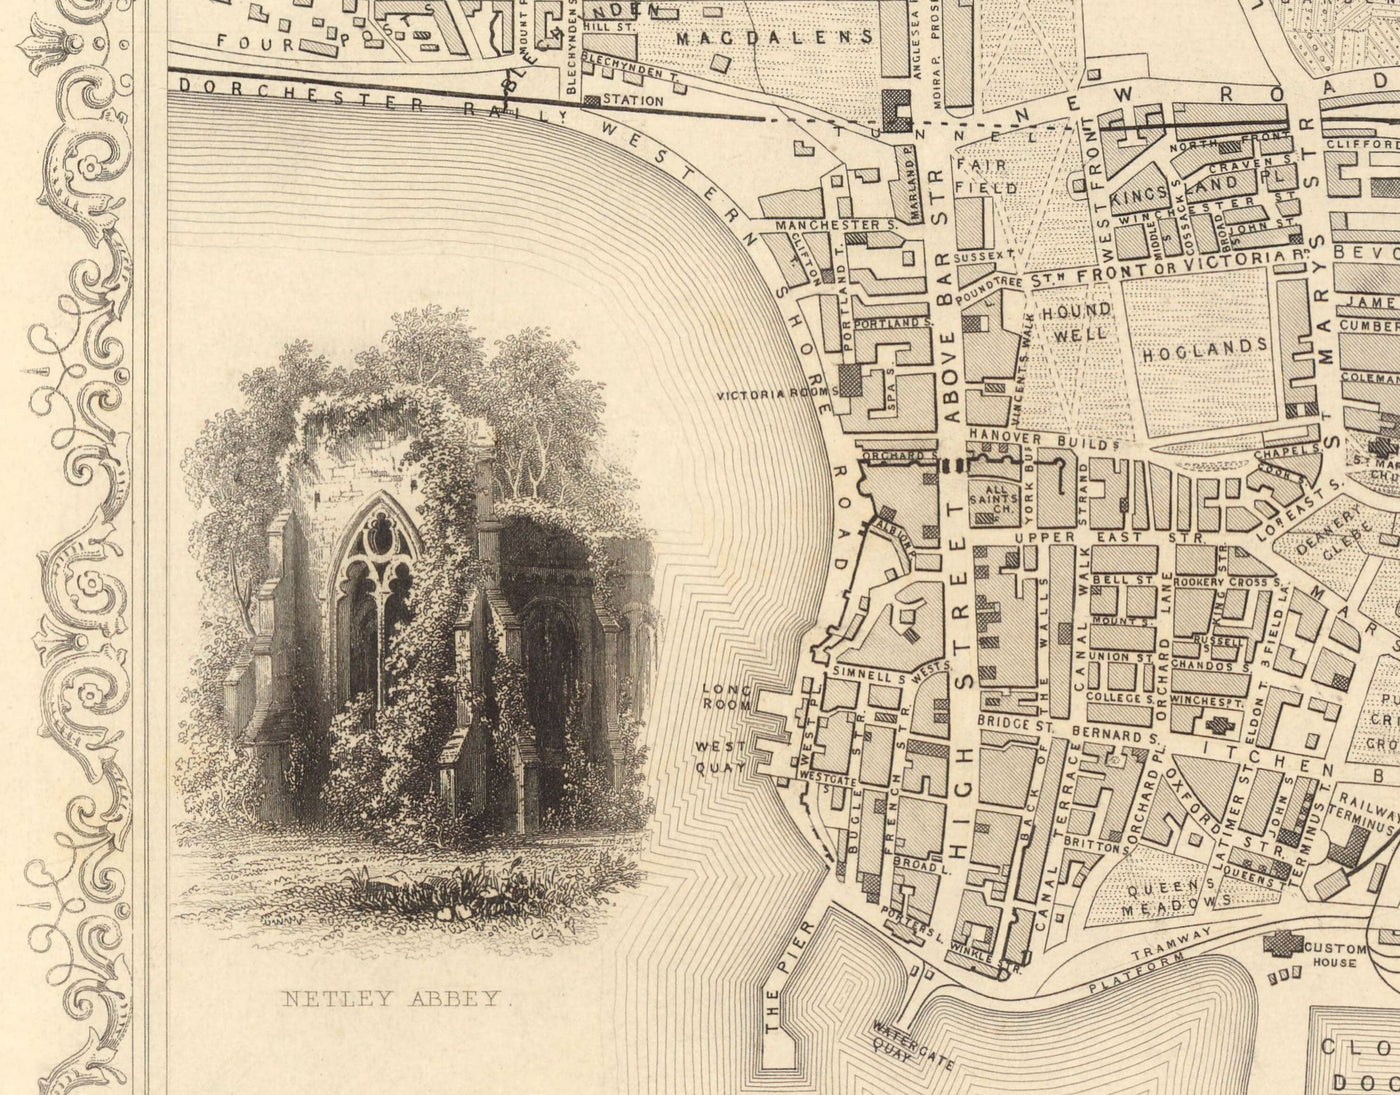 Old Map of Southampton in 1851 by Tallis & Rapkin - City Centre, River Itchen, Chapel, Docks, Ocean Village